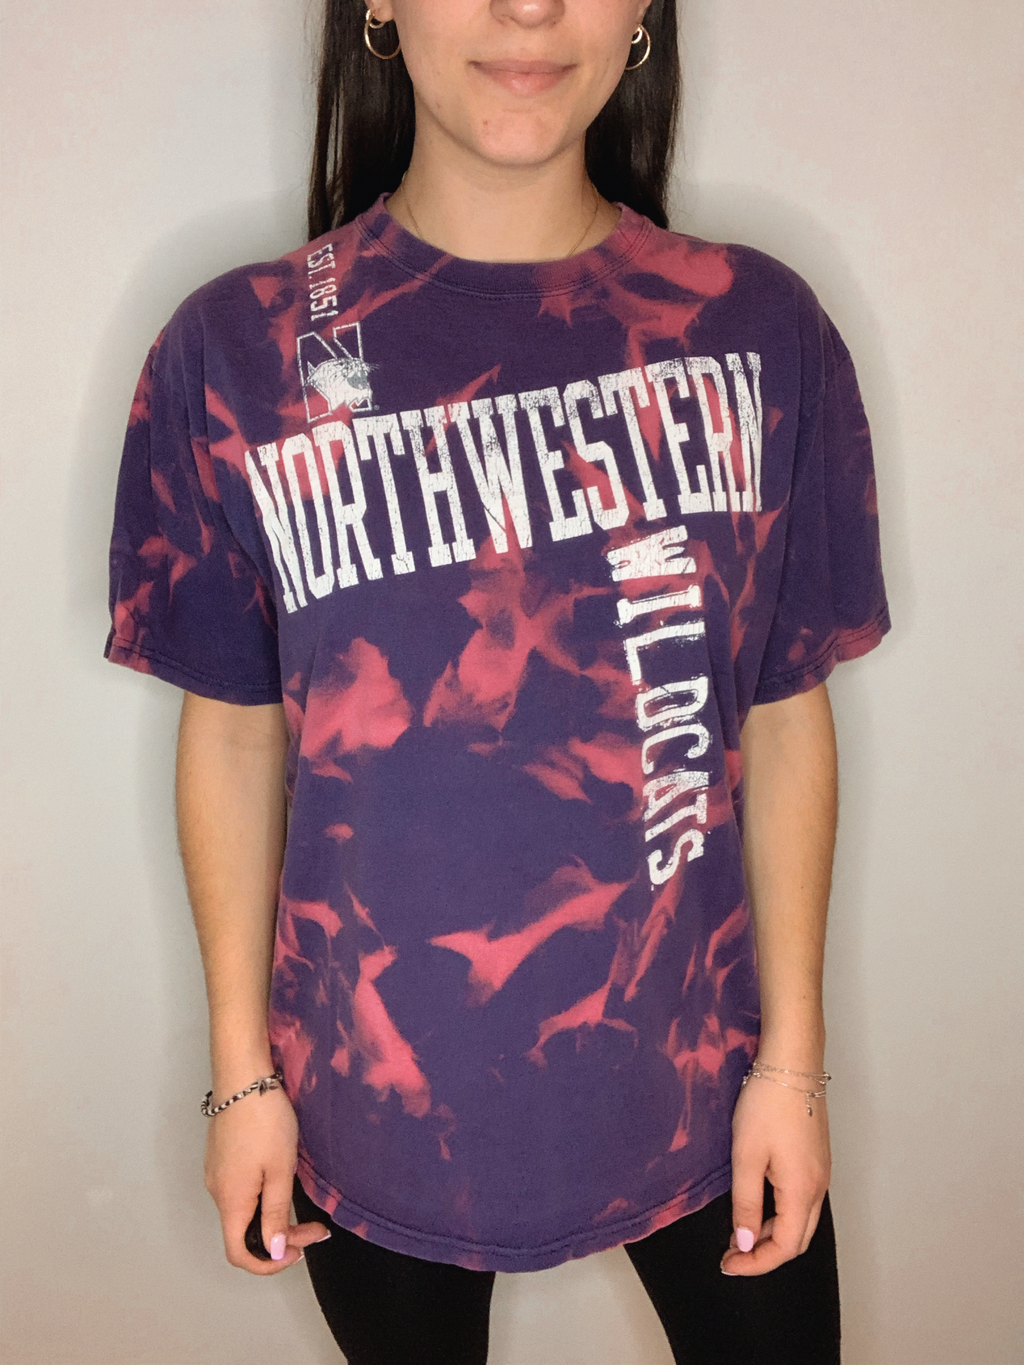 Northwestern Bleached Shirt